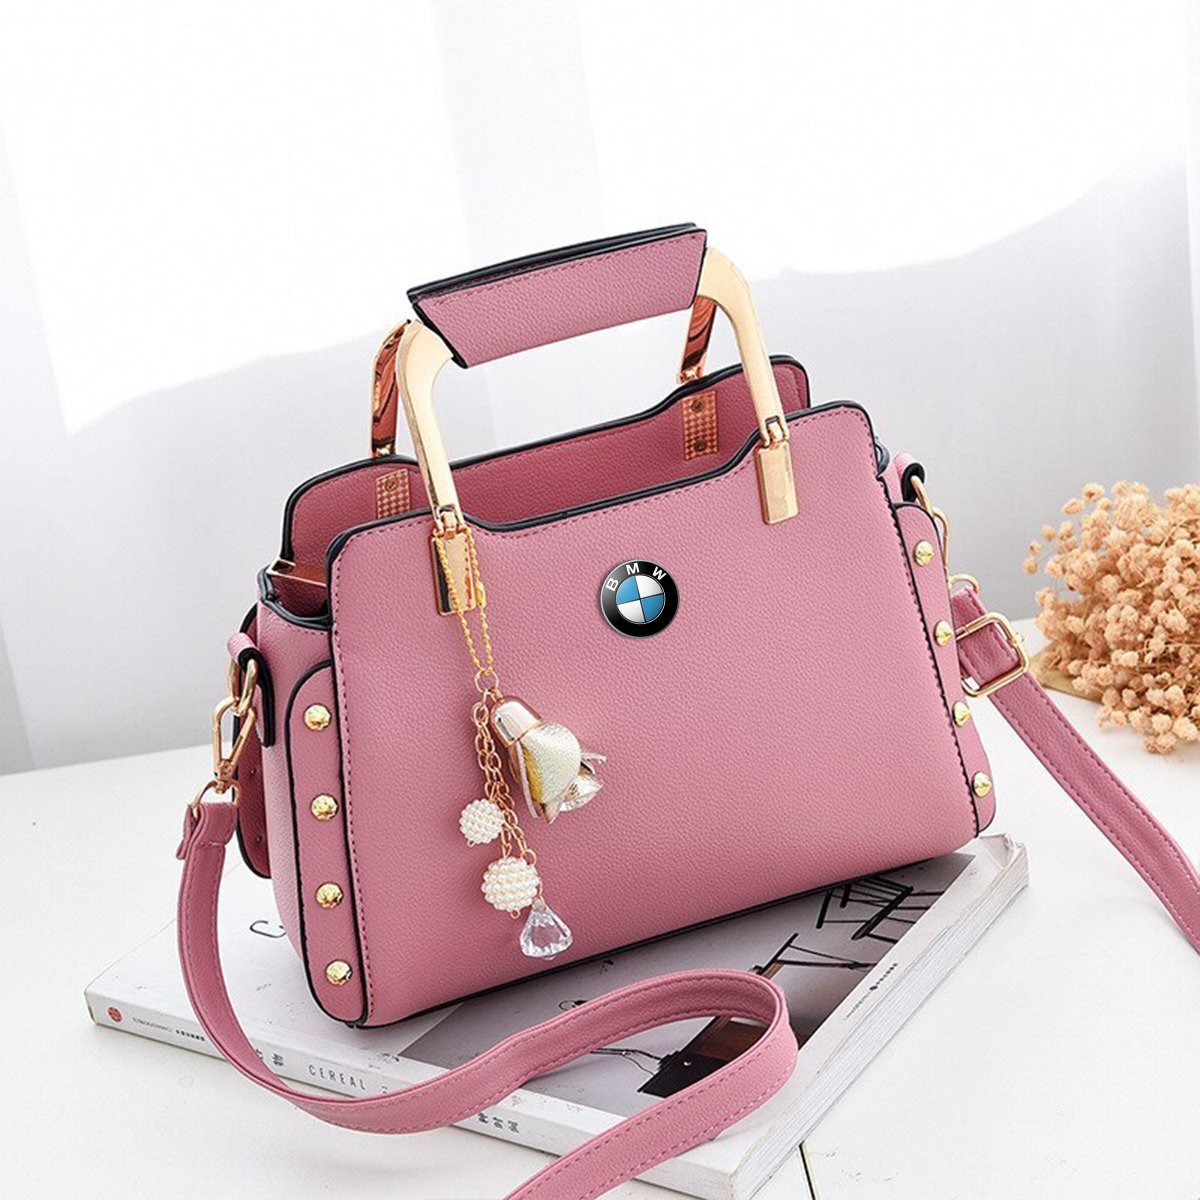 PINK - Women's leather bags & purses: shop online